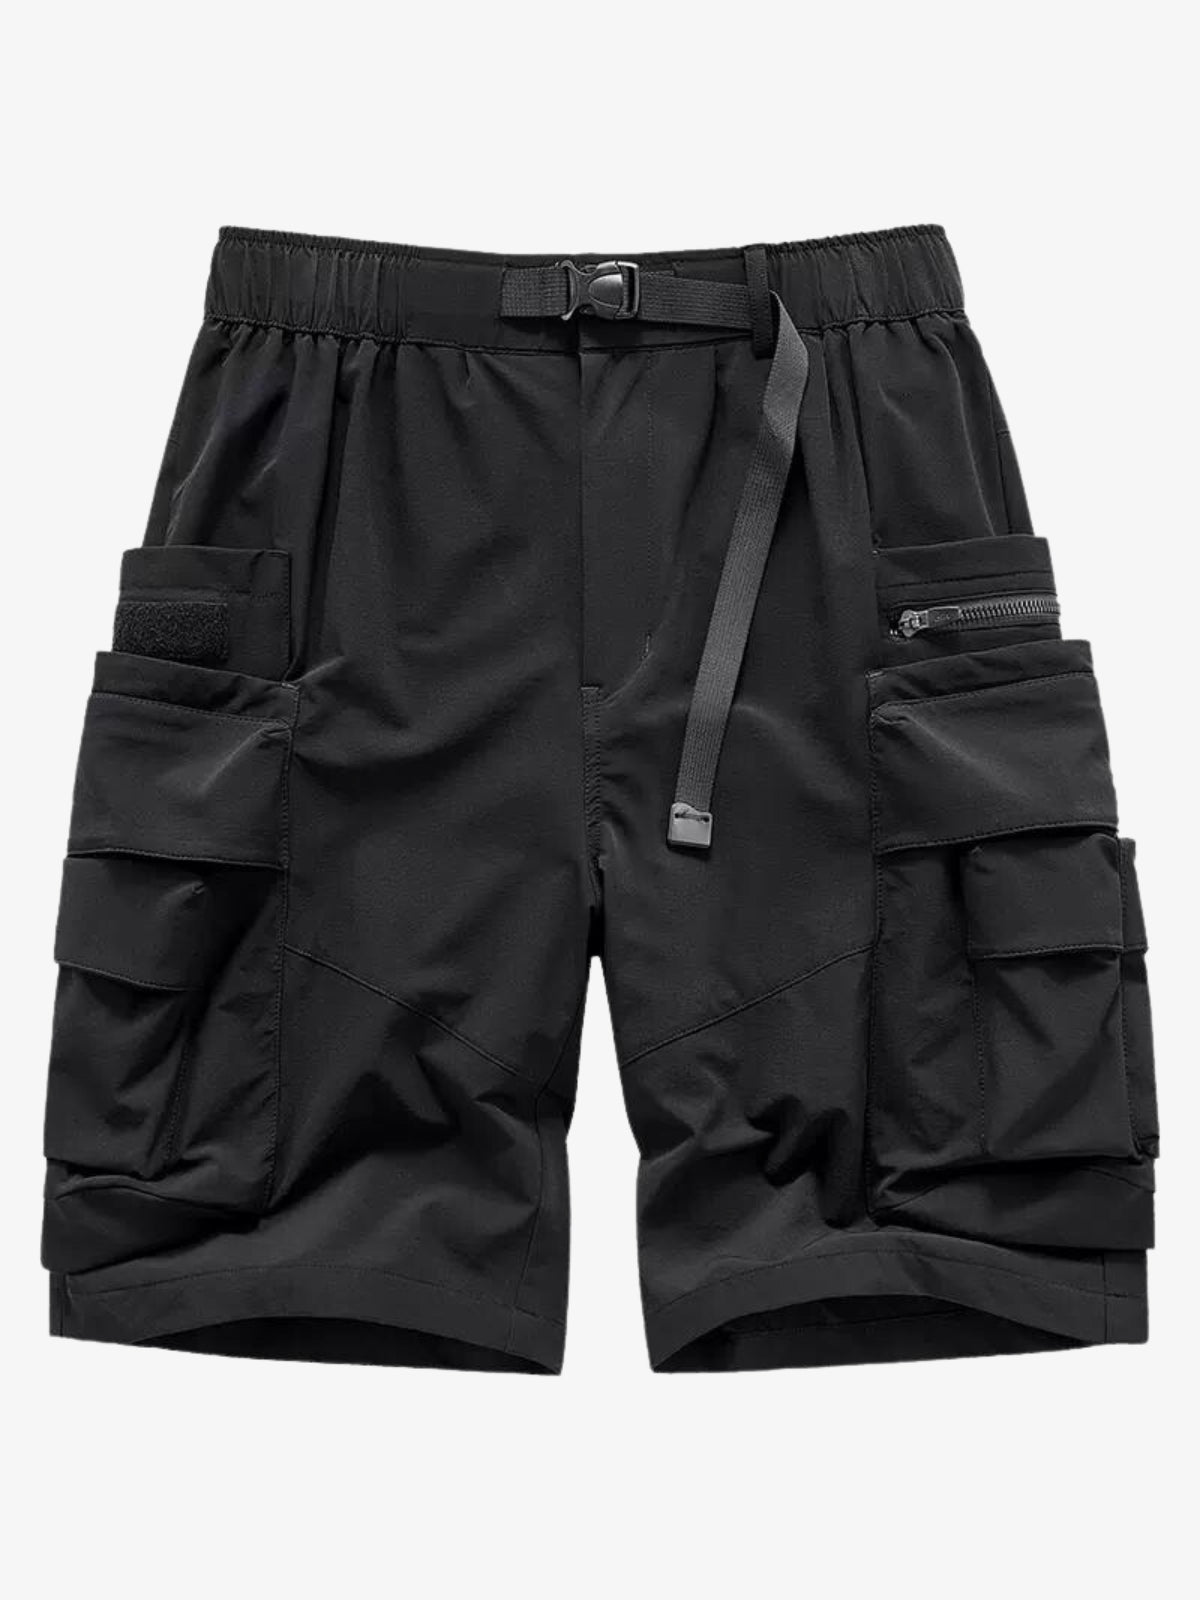 FlexFit Elastic Multi-Pocket Shorts